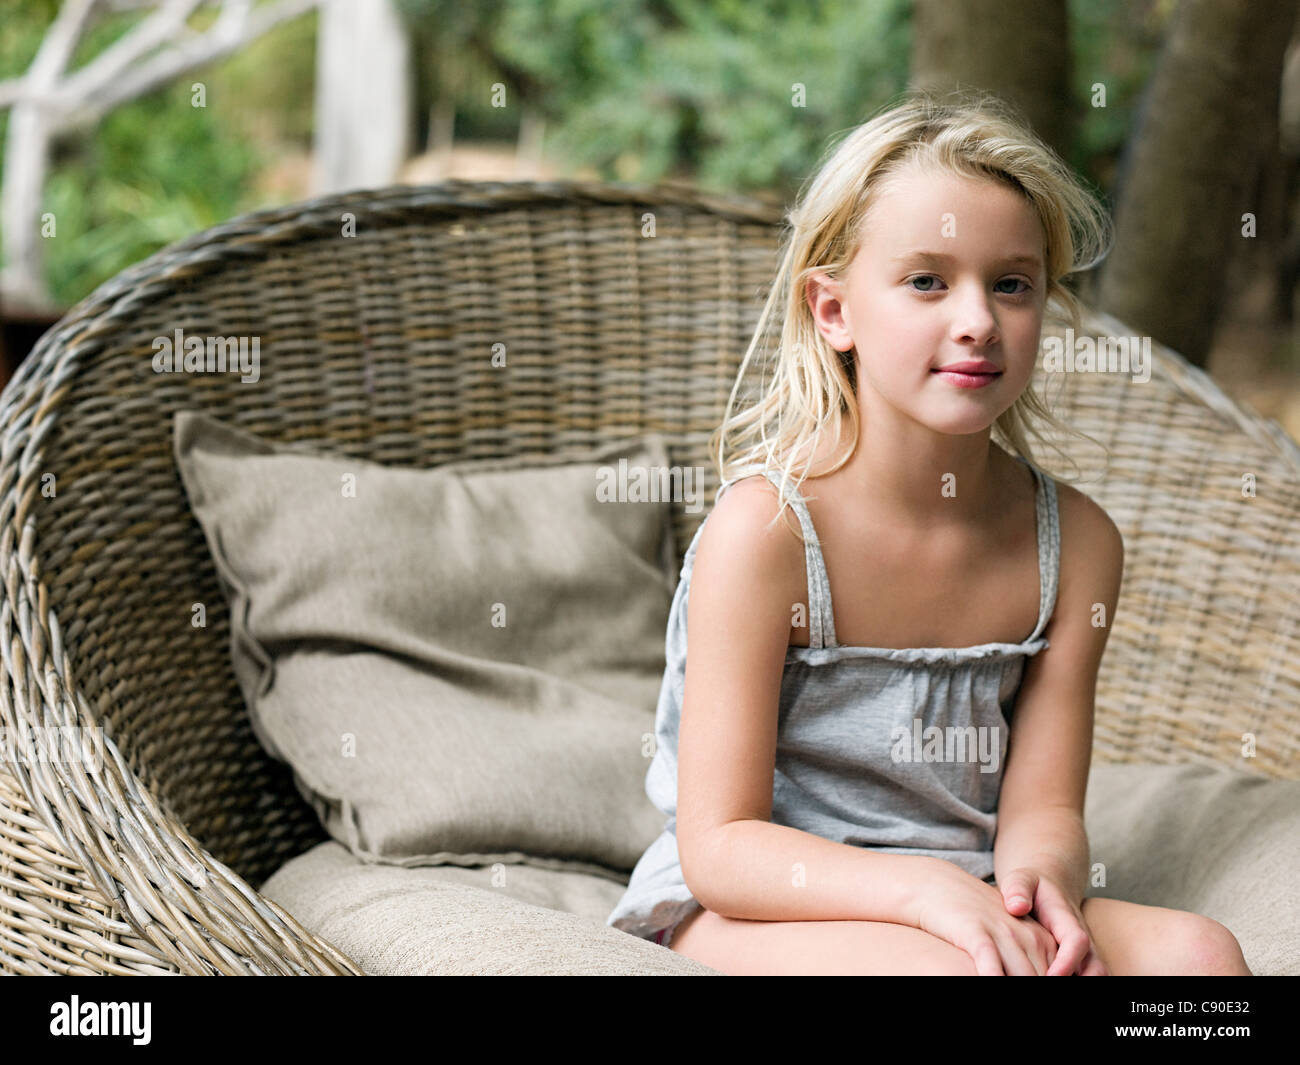 Girl sitting in wicker chair, portrait Stock Photo